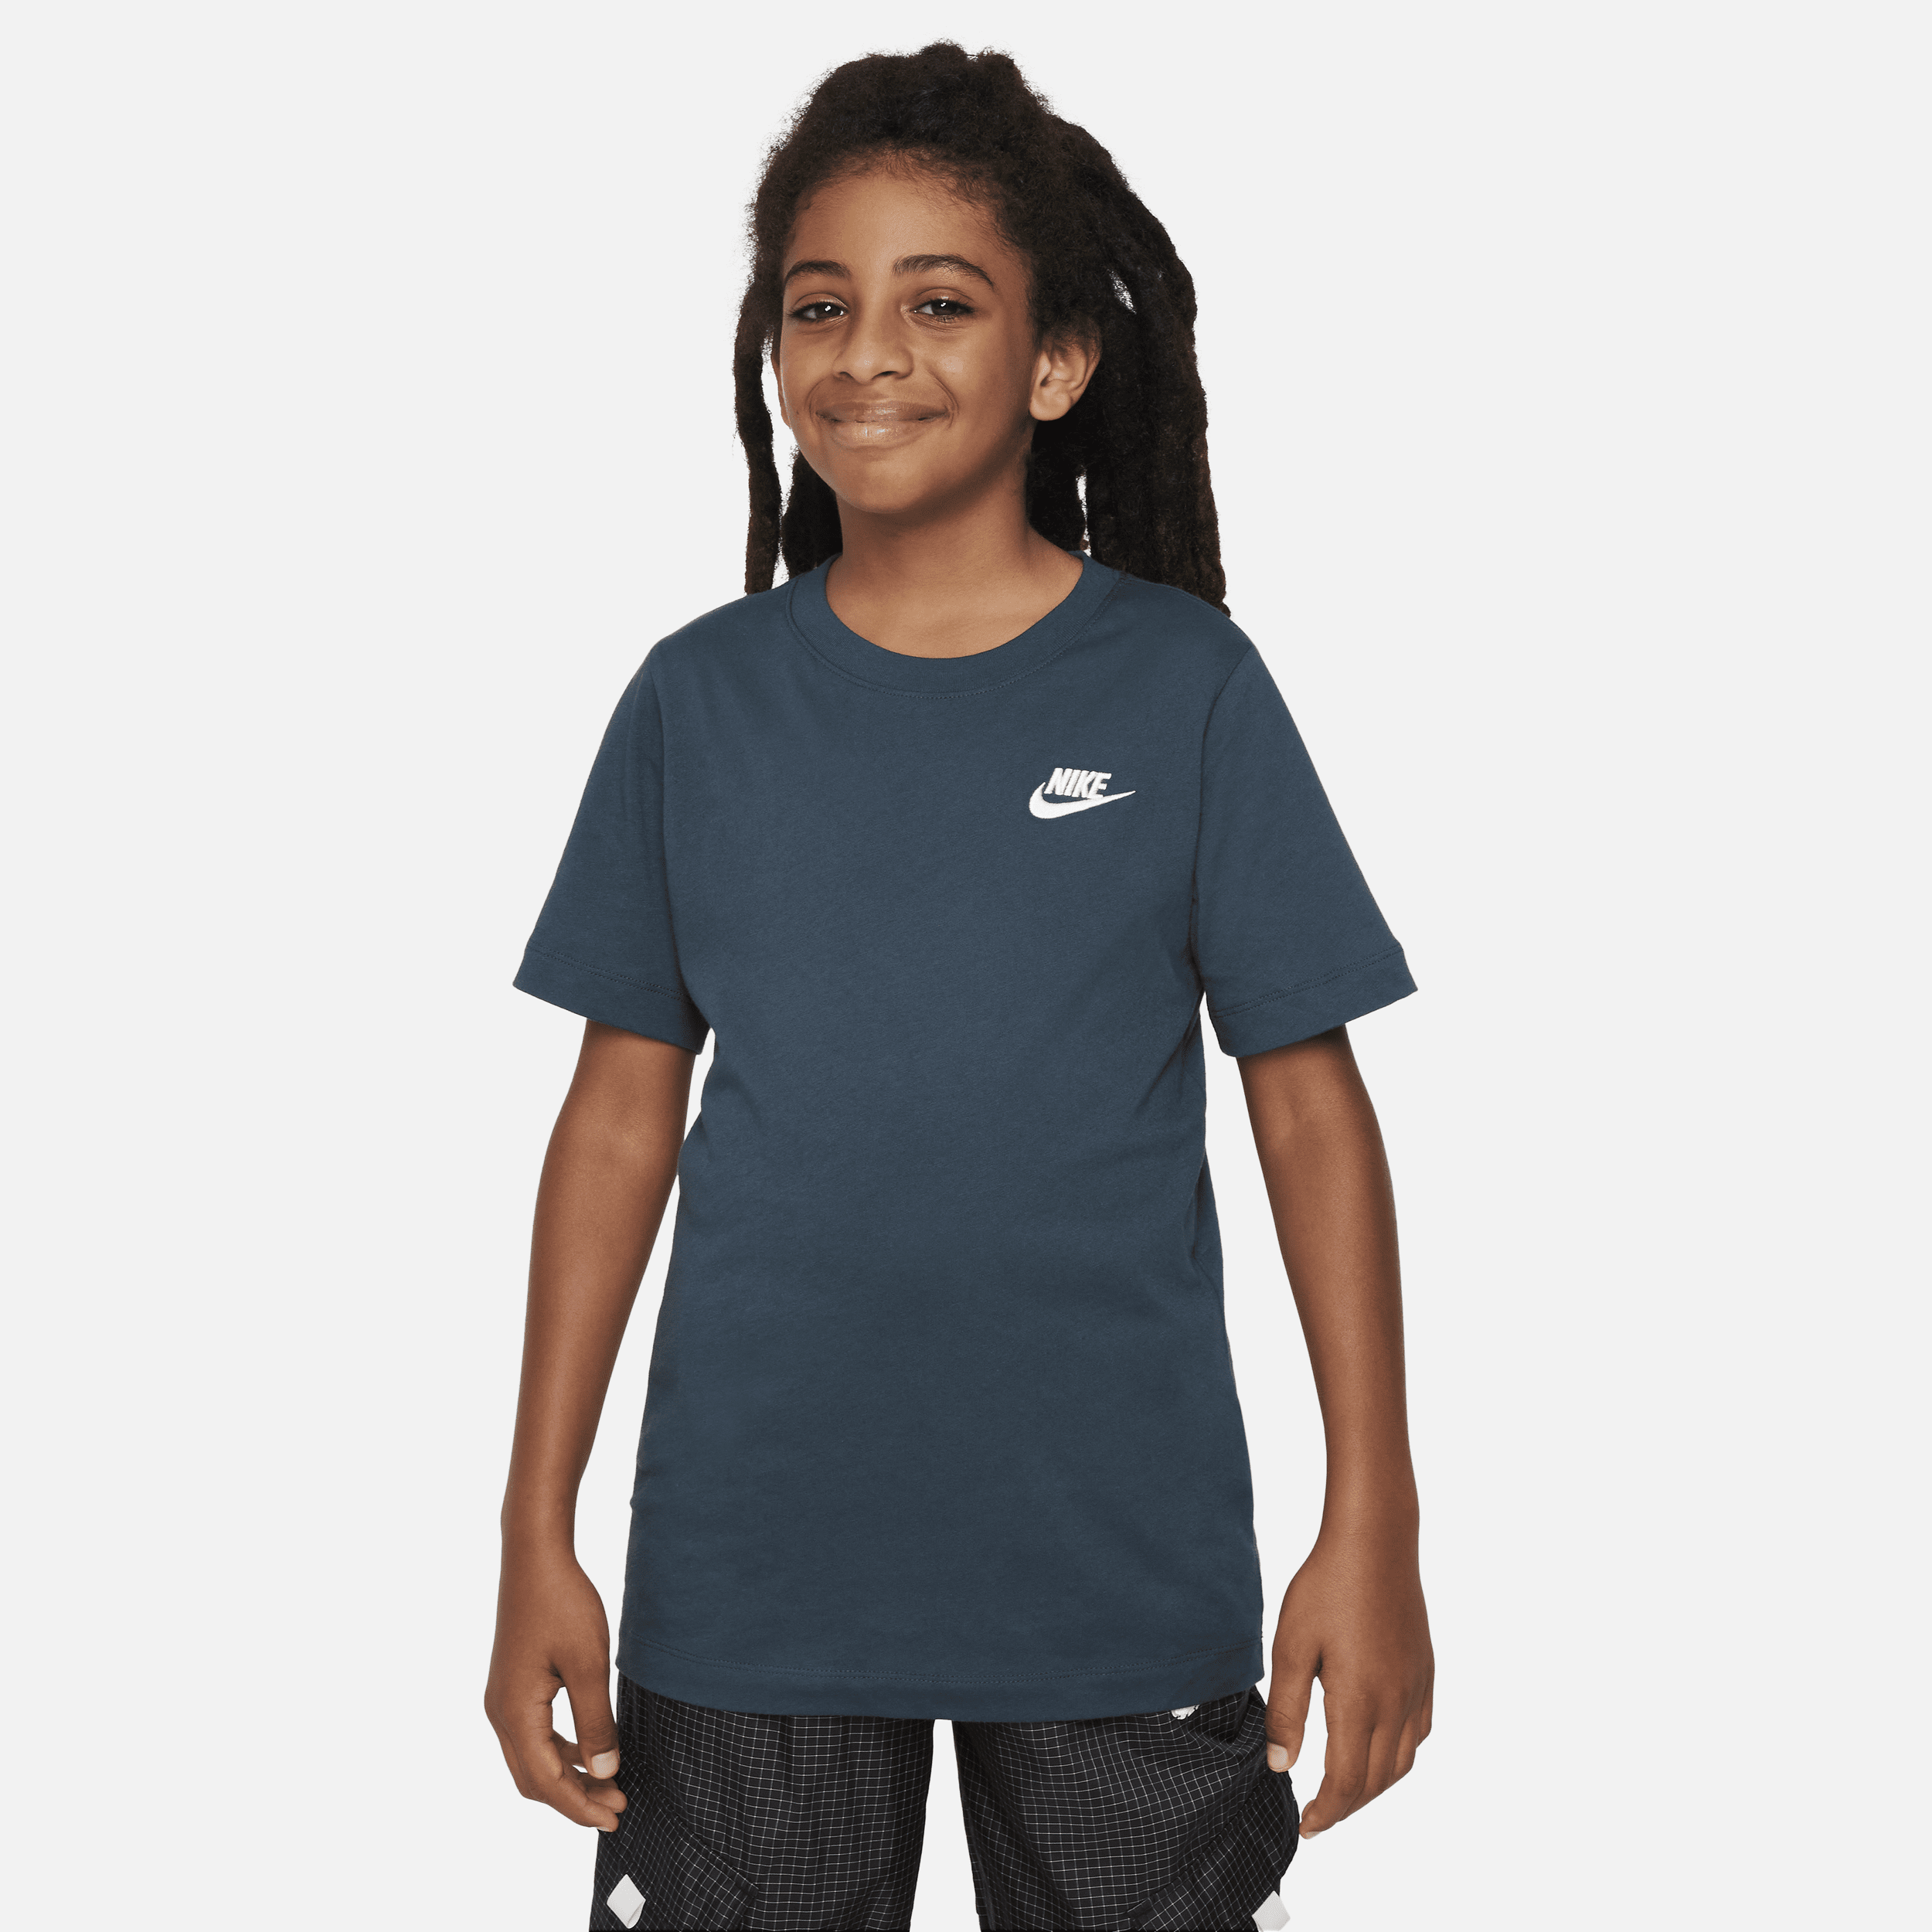 Nike Sportswear Camiseta - Niño/a - Verde